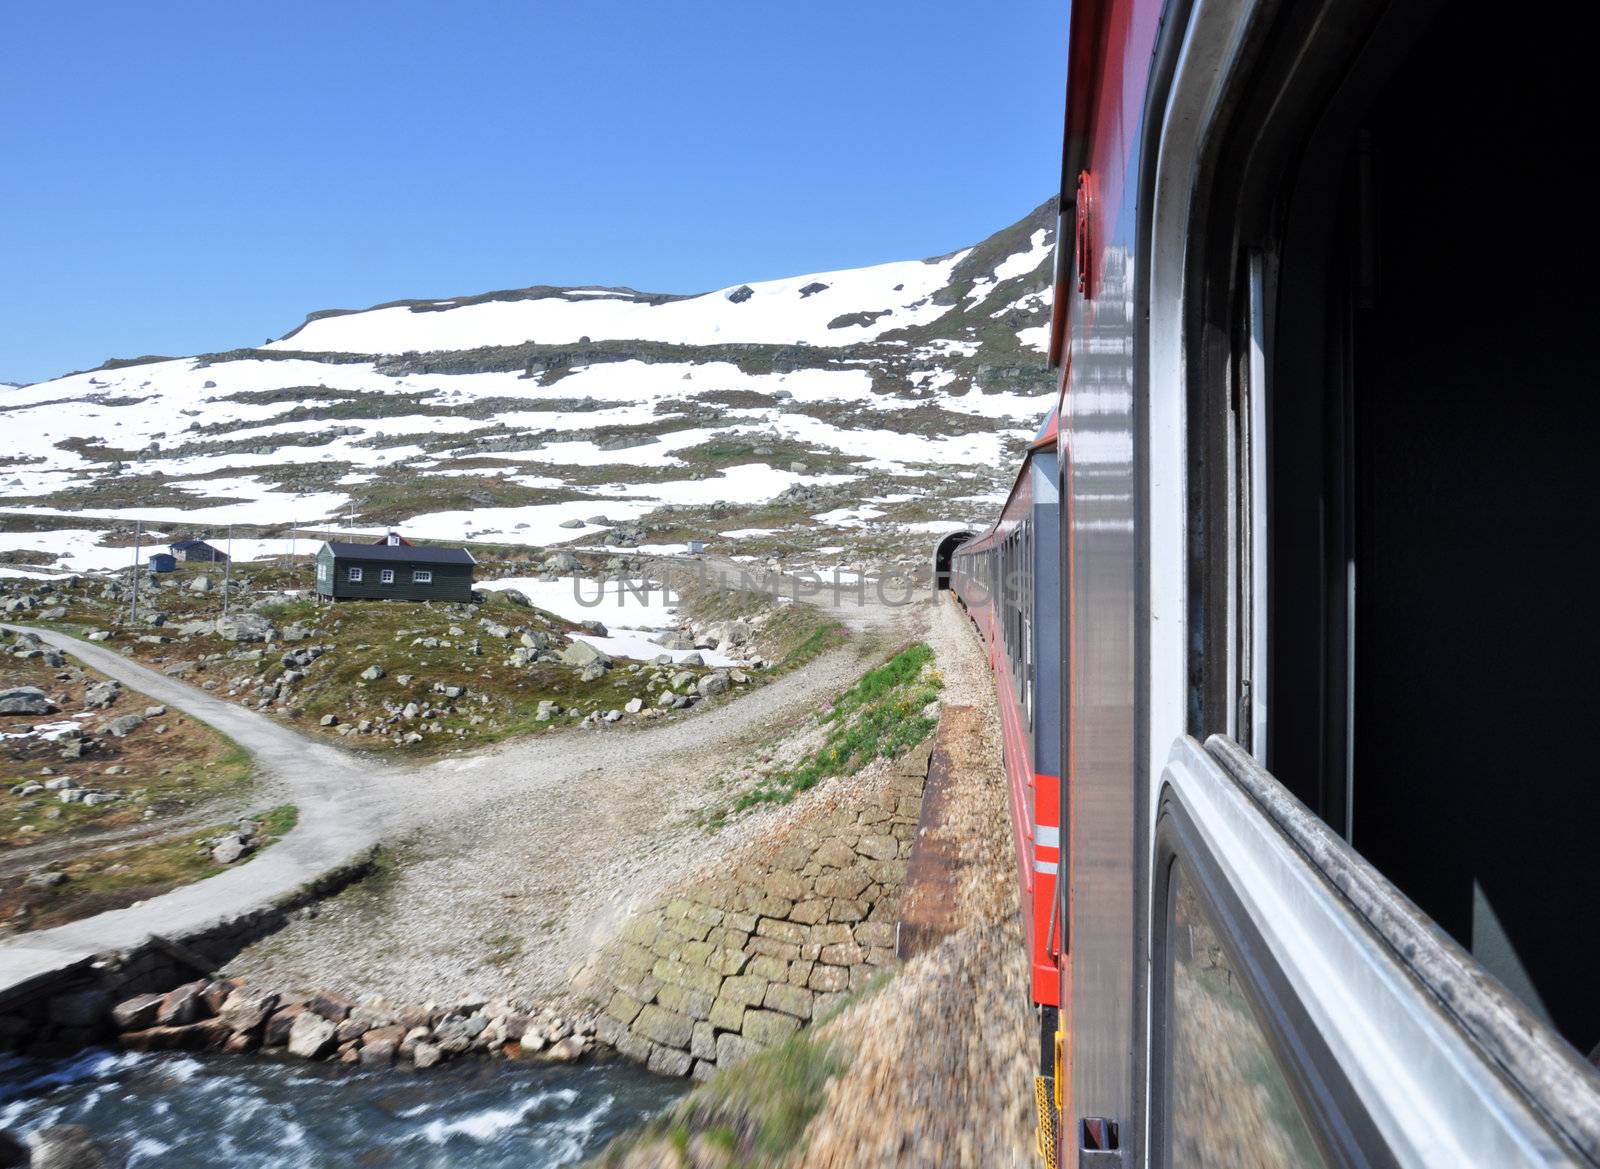 Train in Norway by dutourdumonde